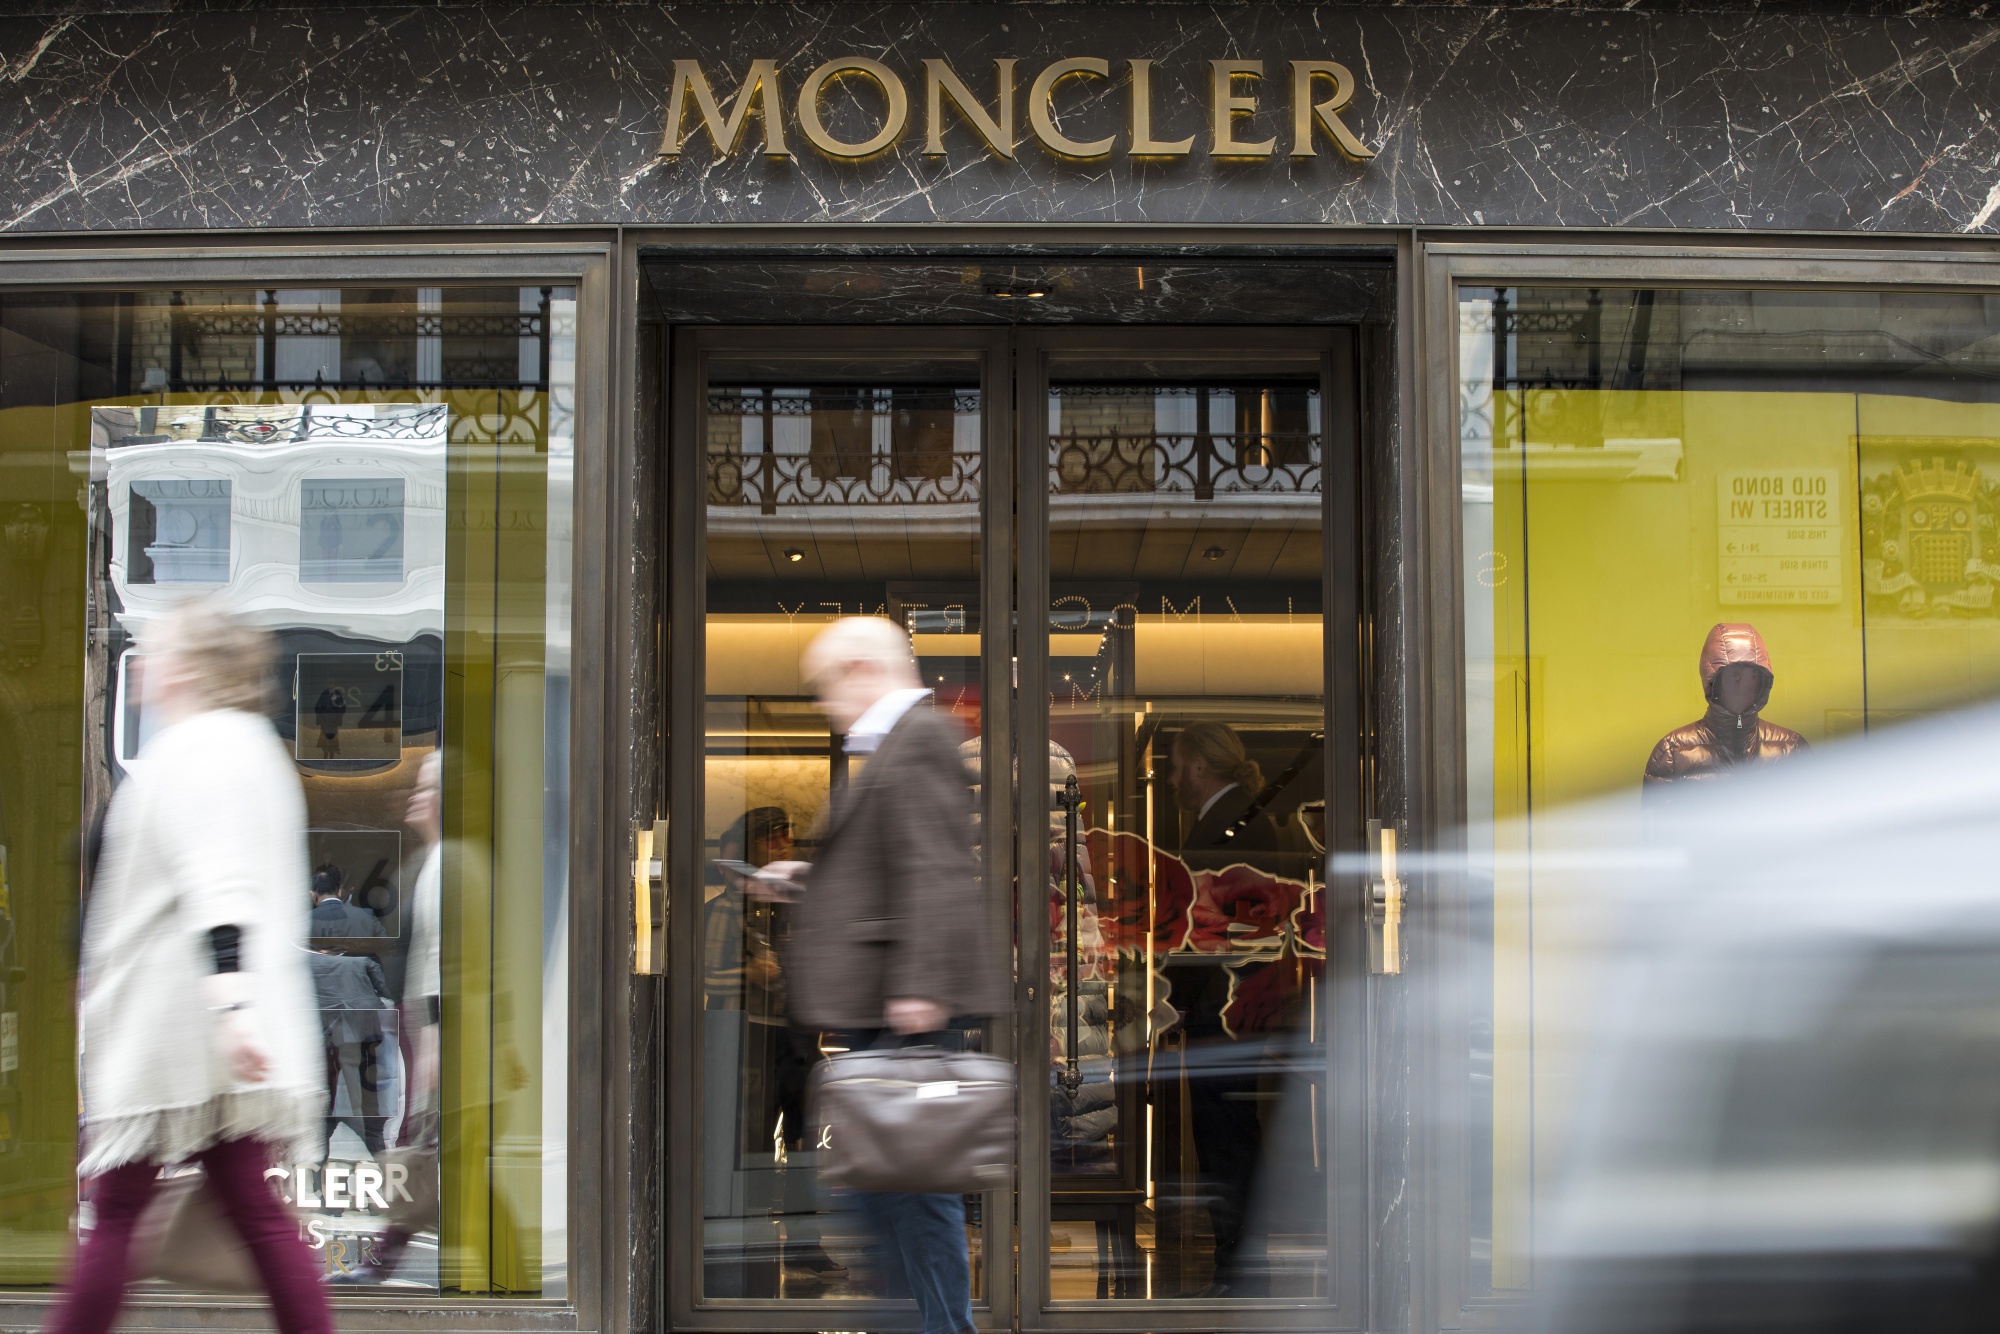 Beyond Fashion, Beyond Luxury - Moncler Buys Stone Island for $1.4 Billion  - The Upscale Club